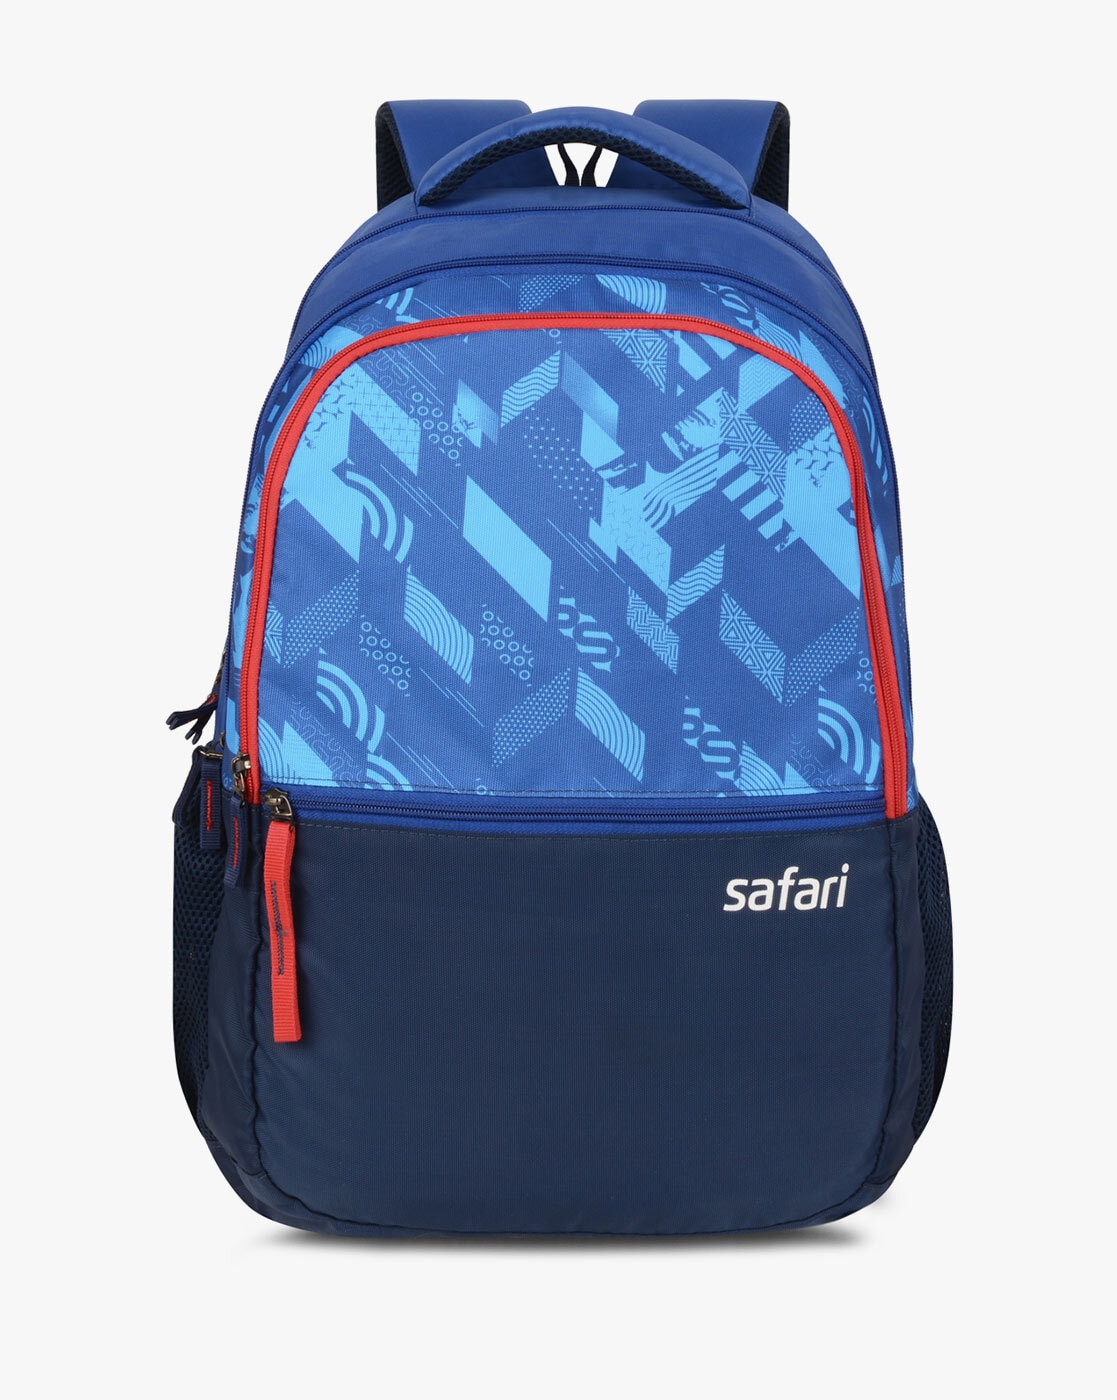 Buy Safari Scope 1 Blue Spacious Professional Backpack at Amazonin